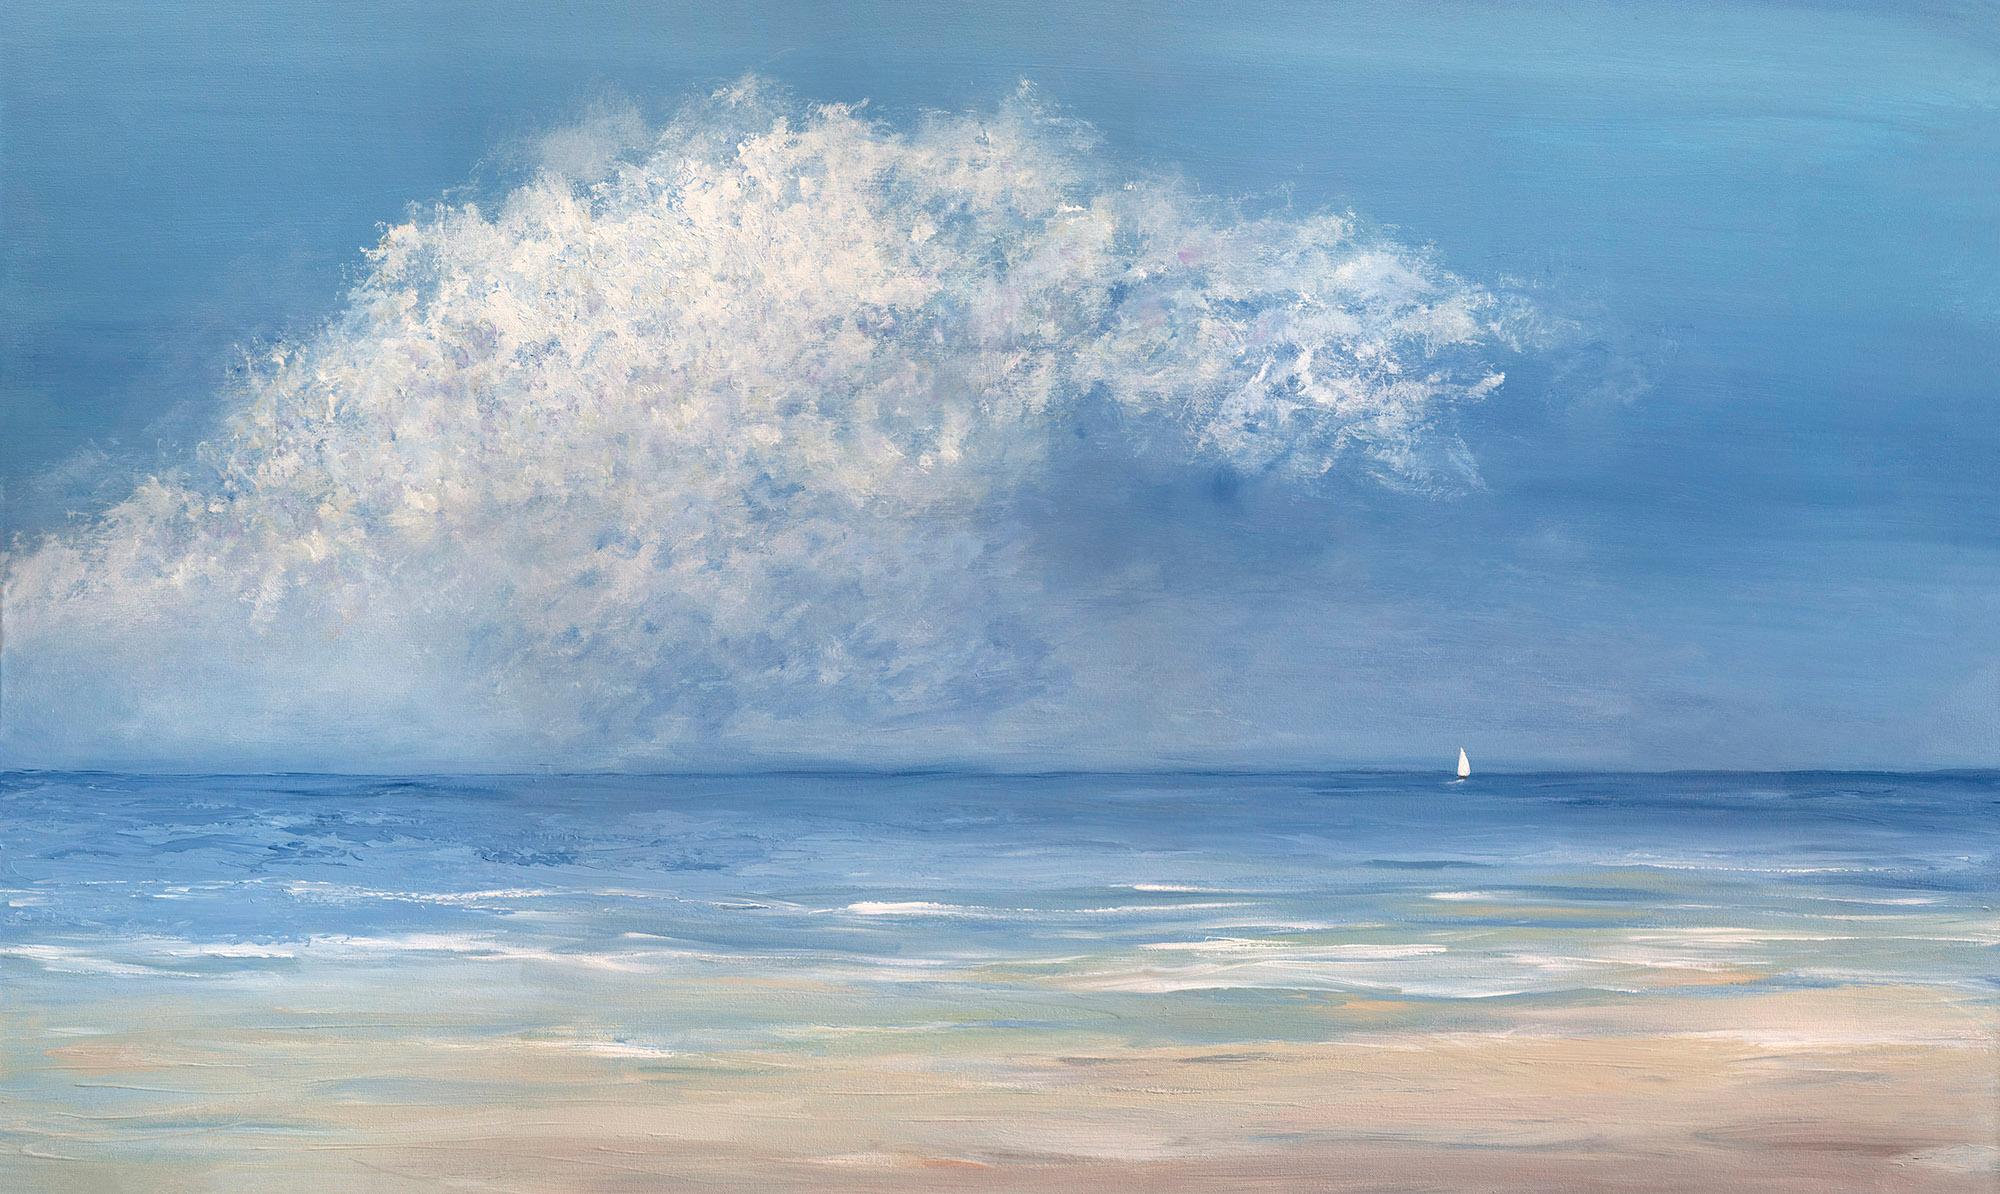 S. Cora Aldo Landscape Painting - "On the Wind, " Coastal Seascape Painting